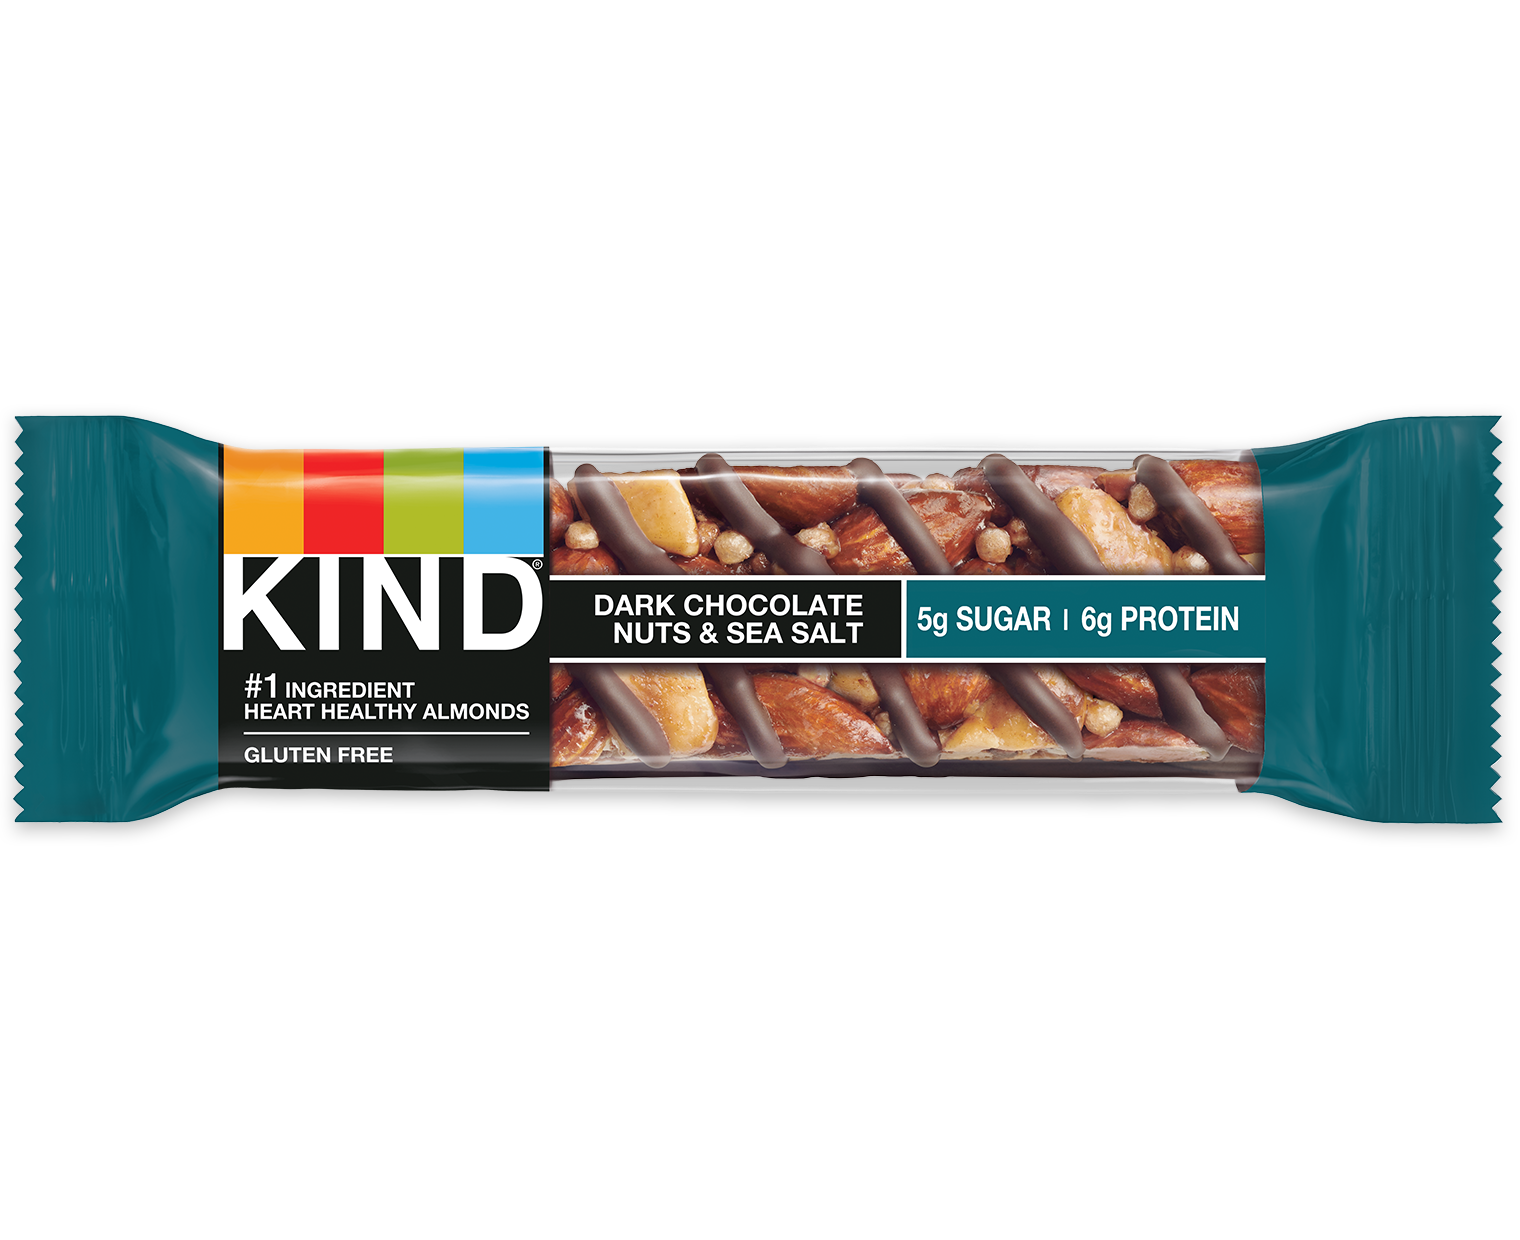 KIND Nut Bar – Dietitian Review